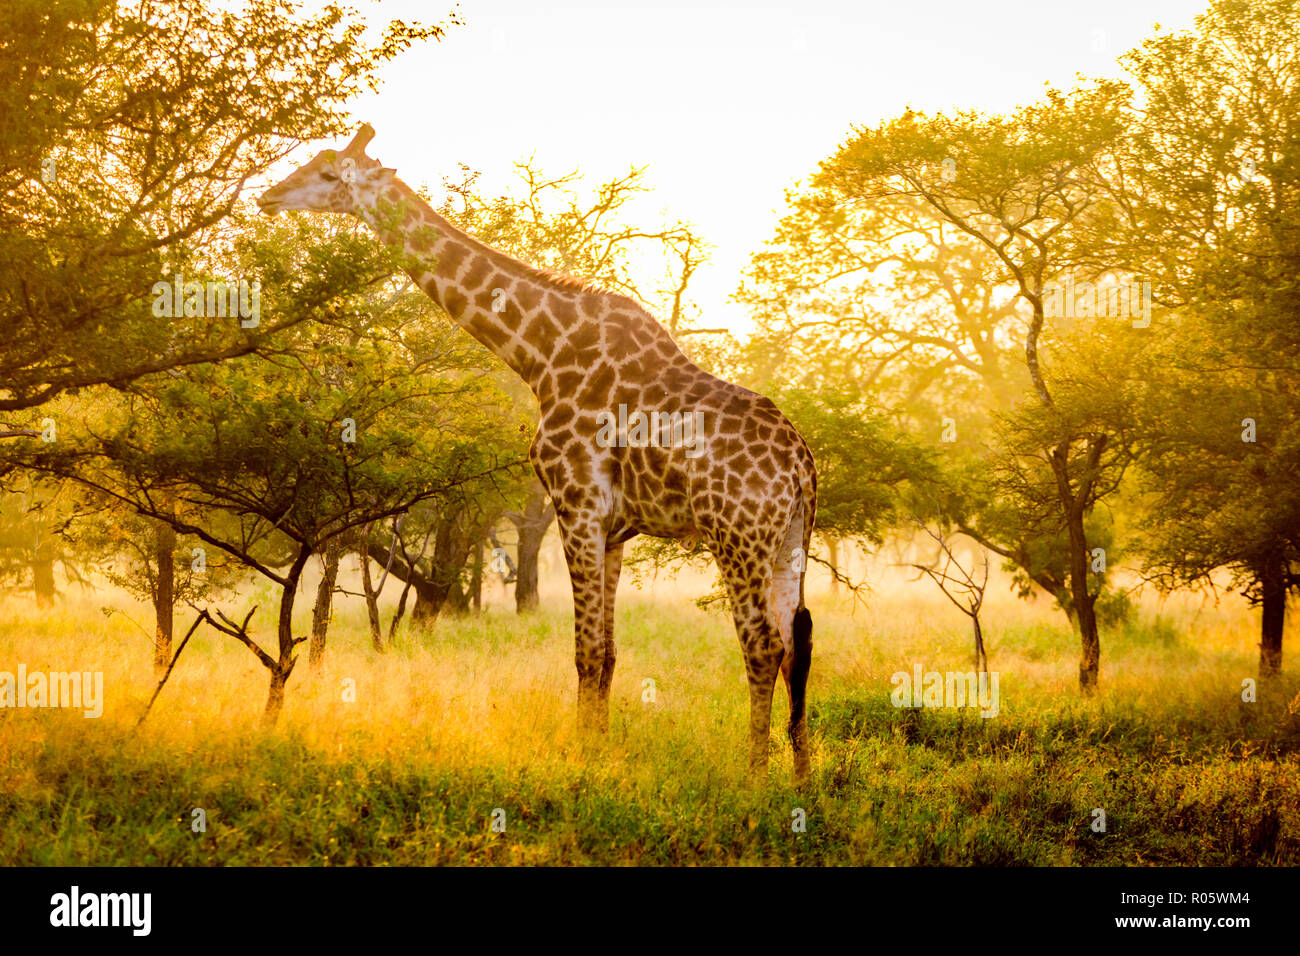 Girafe (Giraffa camelopardalis), Zululand, Afrique du Sud, l'Afrique Banque D'Images